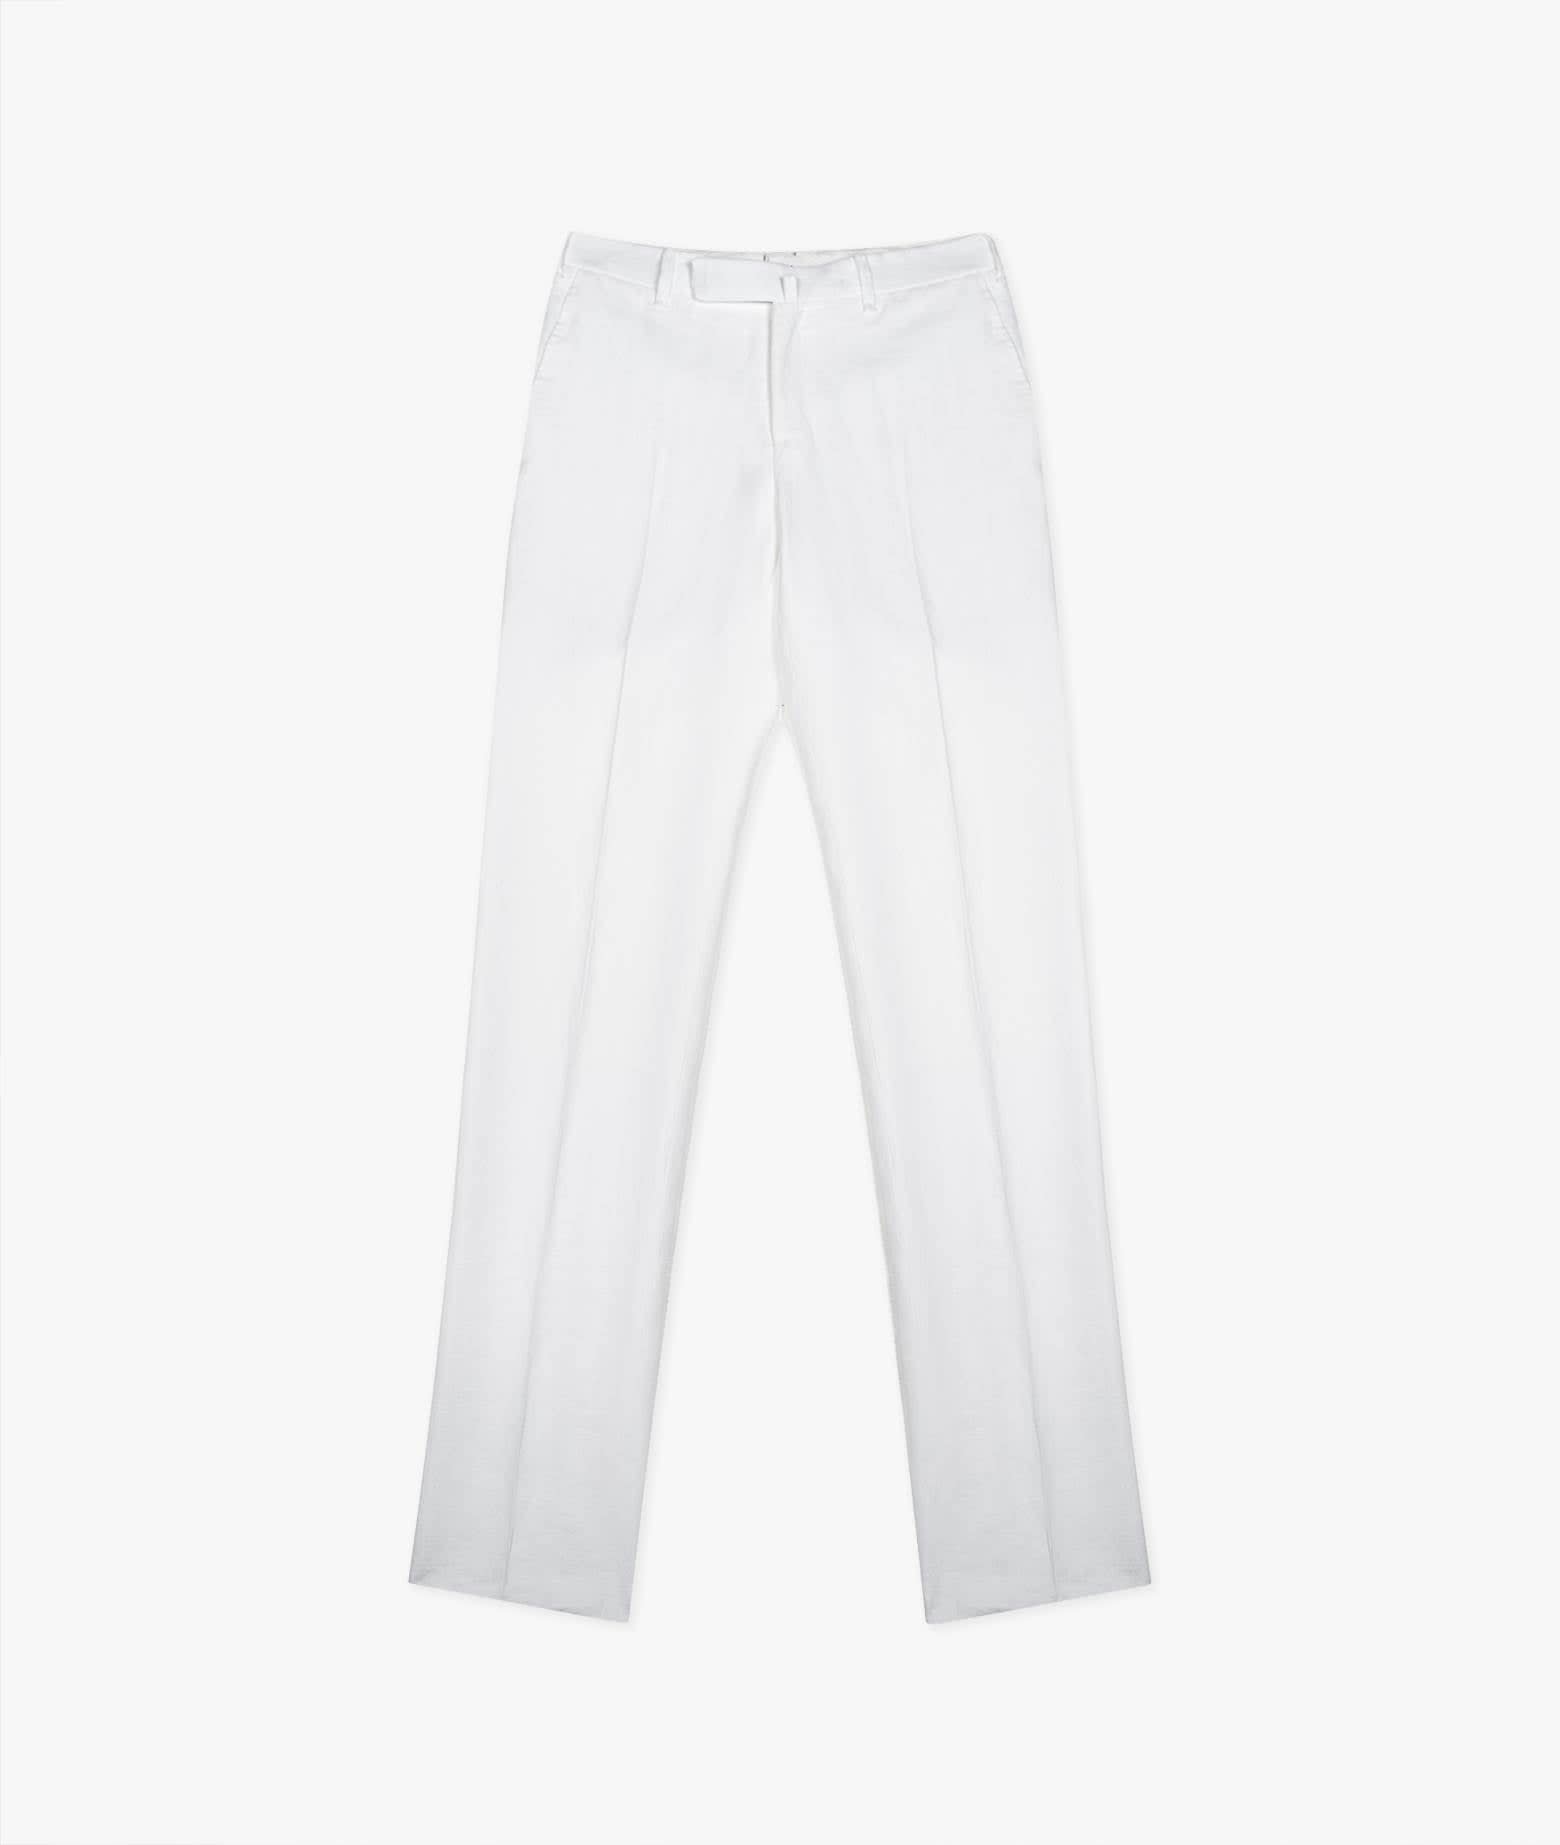 Shop Larusmiani Handmade Trousers Portofino Pants In White